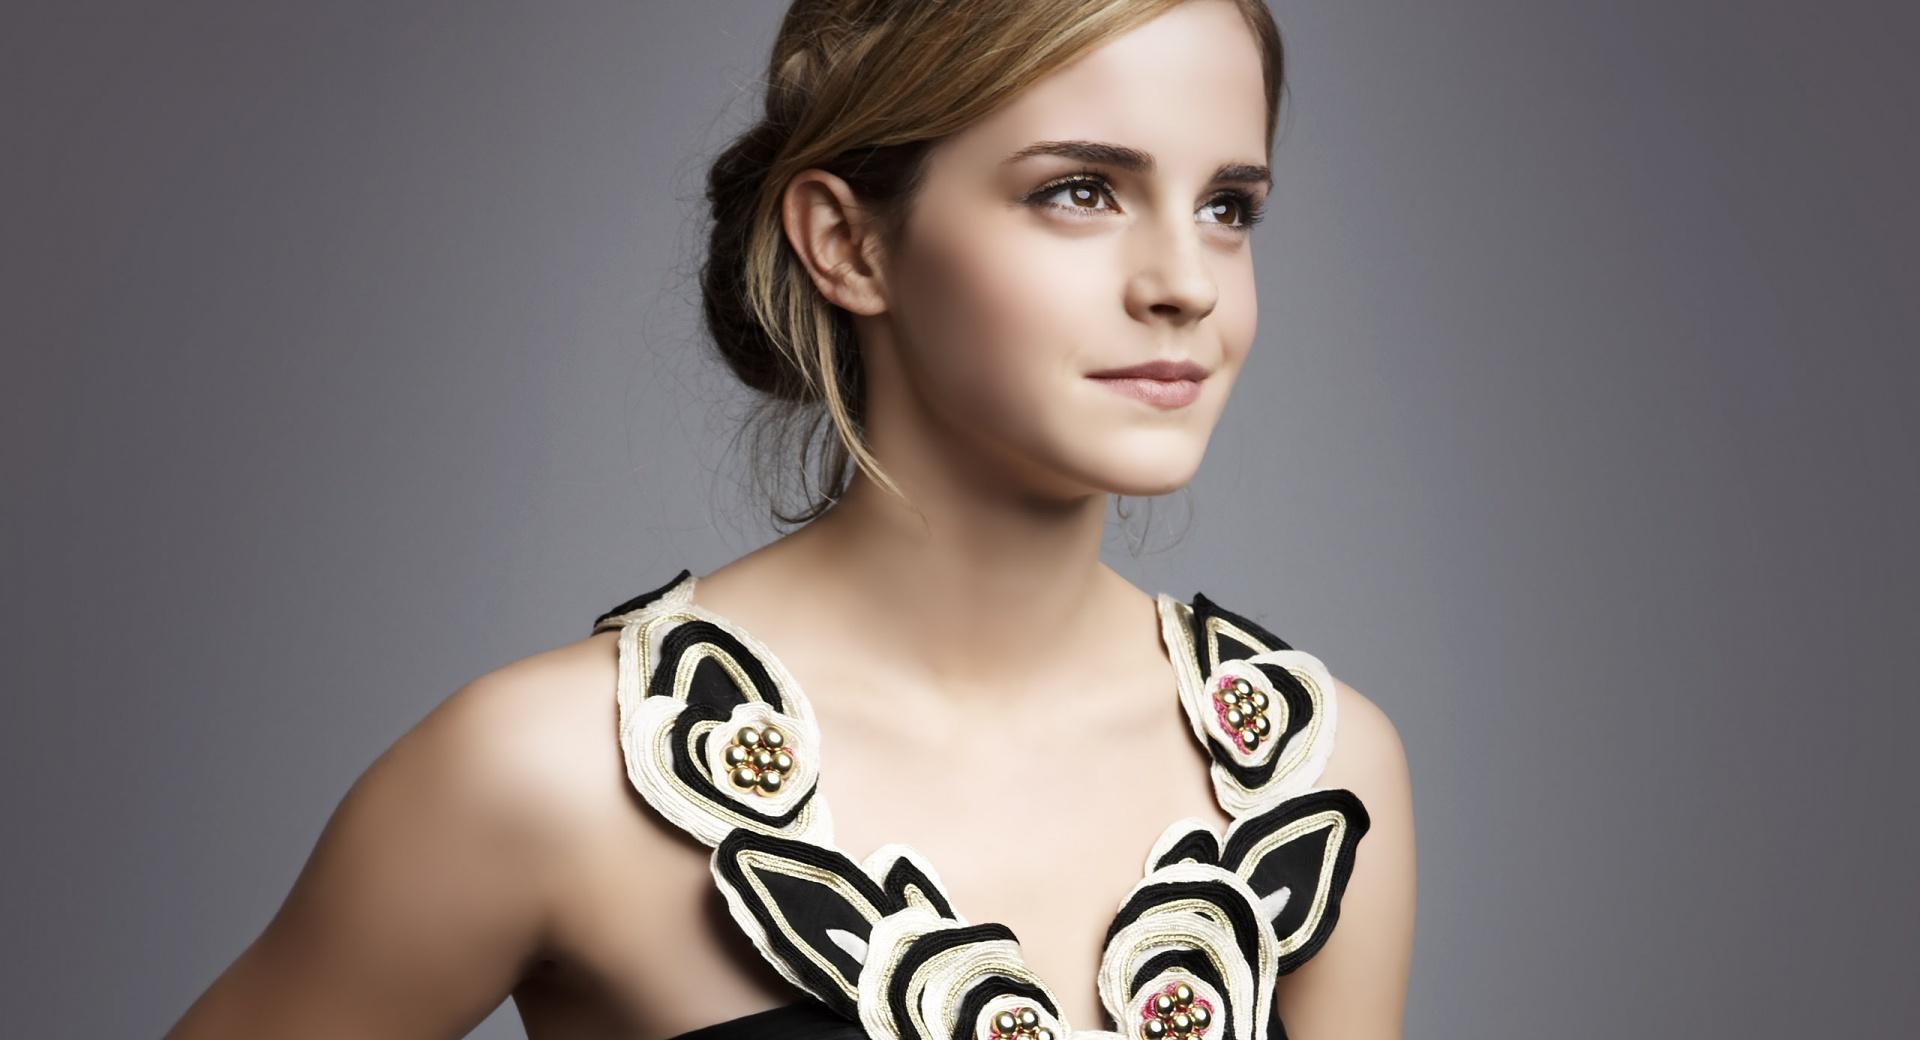 Emma Watson Hollywood 1 at 1024 x 1024 iPad size wallpapers HD quality